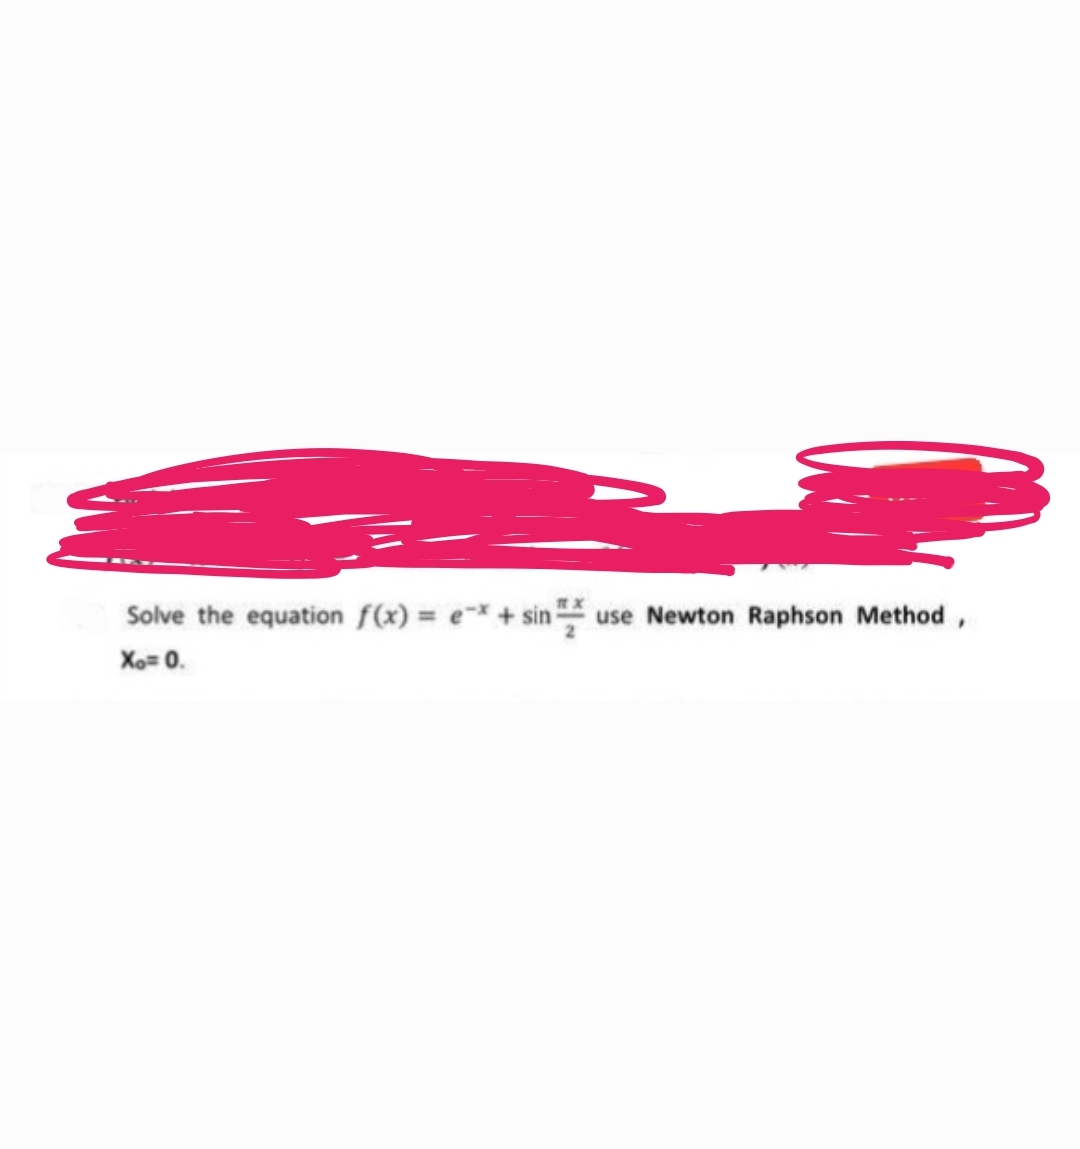 Solve the equation f(x) = -x + sin use Newton Raphson Method,
Xo= 0.